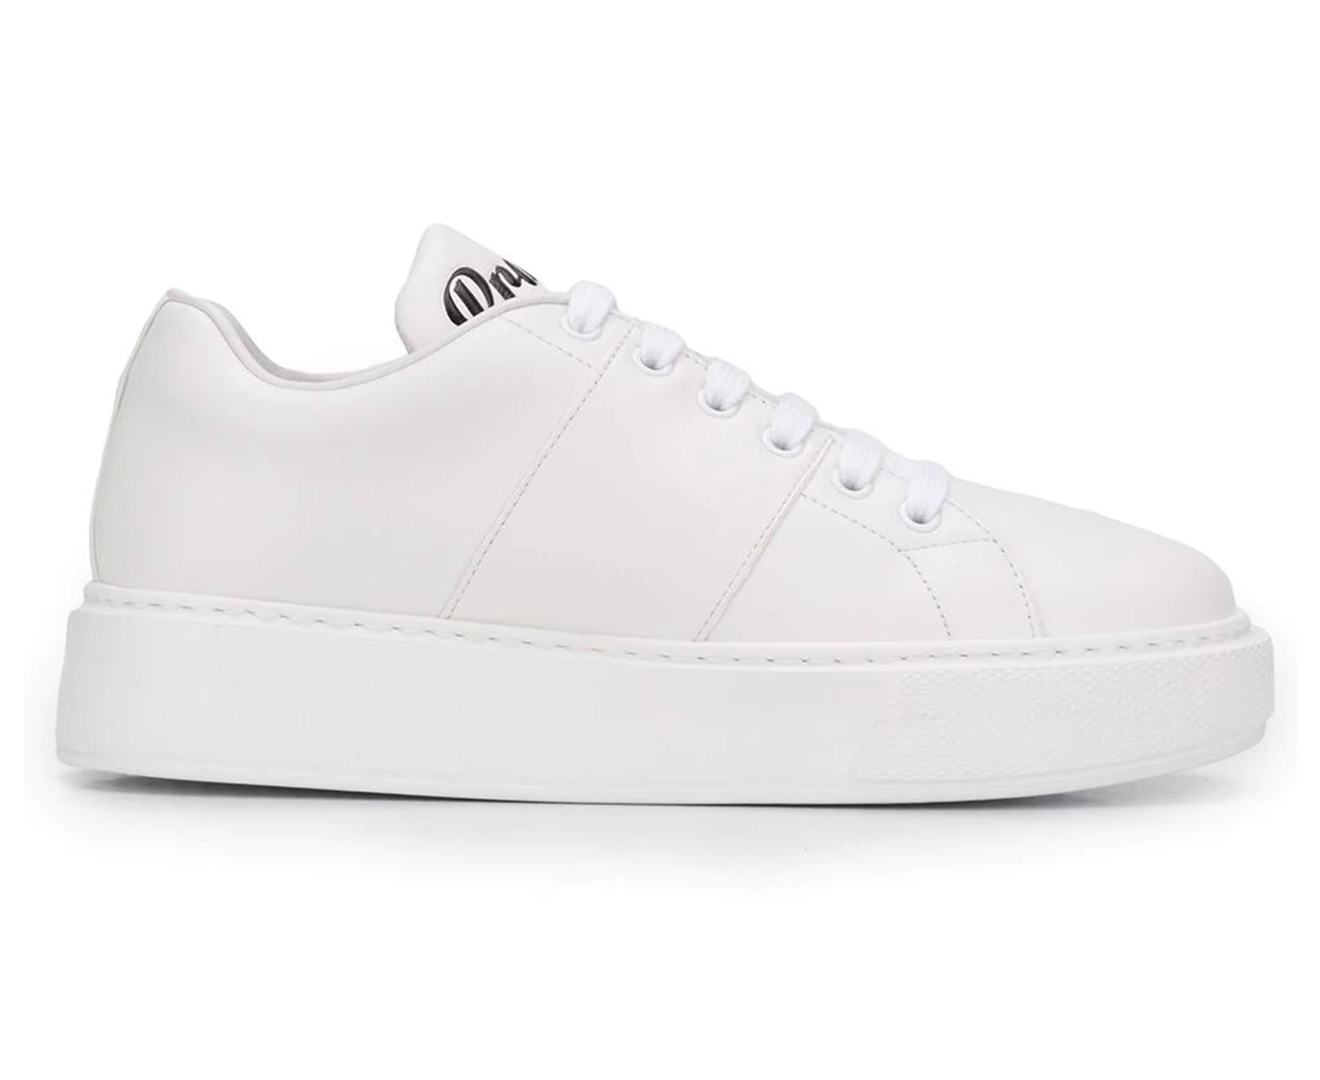 Prada Women's Low Top Logo Sneakers - White | Catch.com.au